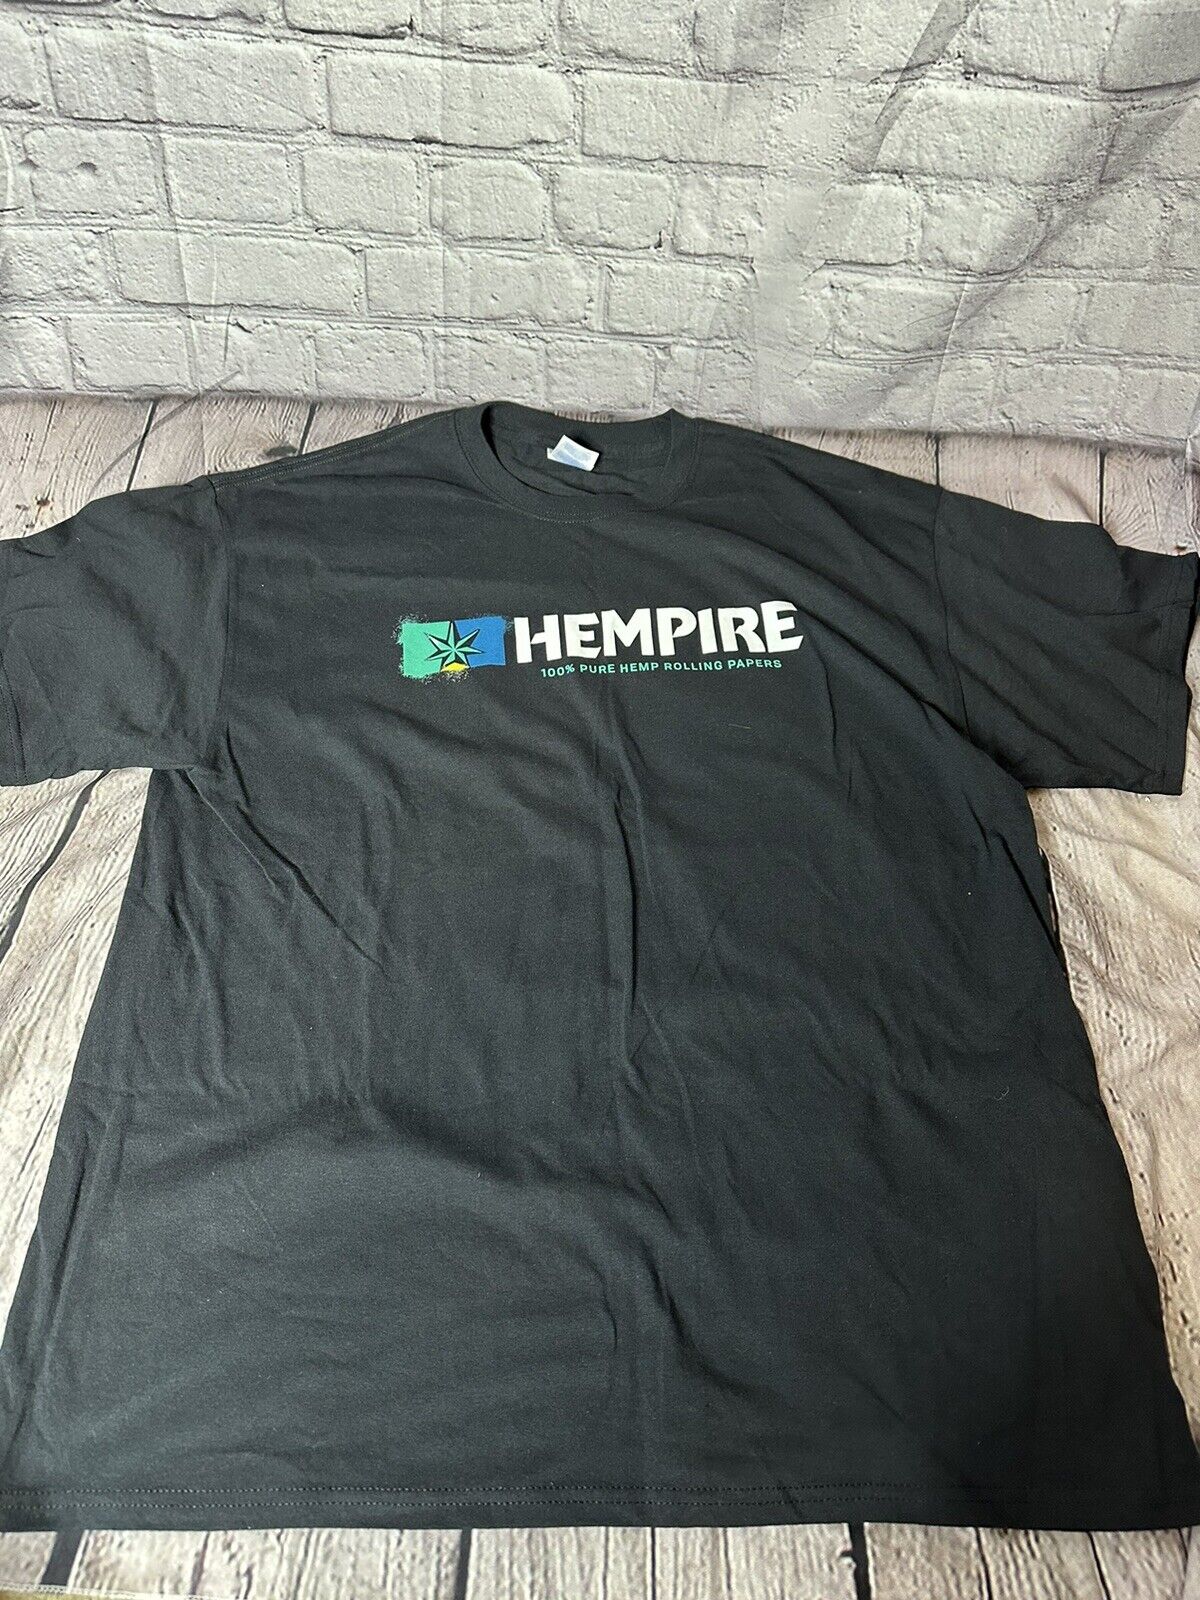 Hempire 100% Pure Hemp Rolling papers Promo T-Shirt Black Size XL